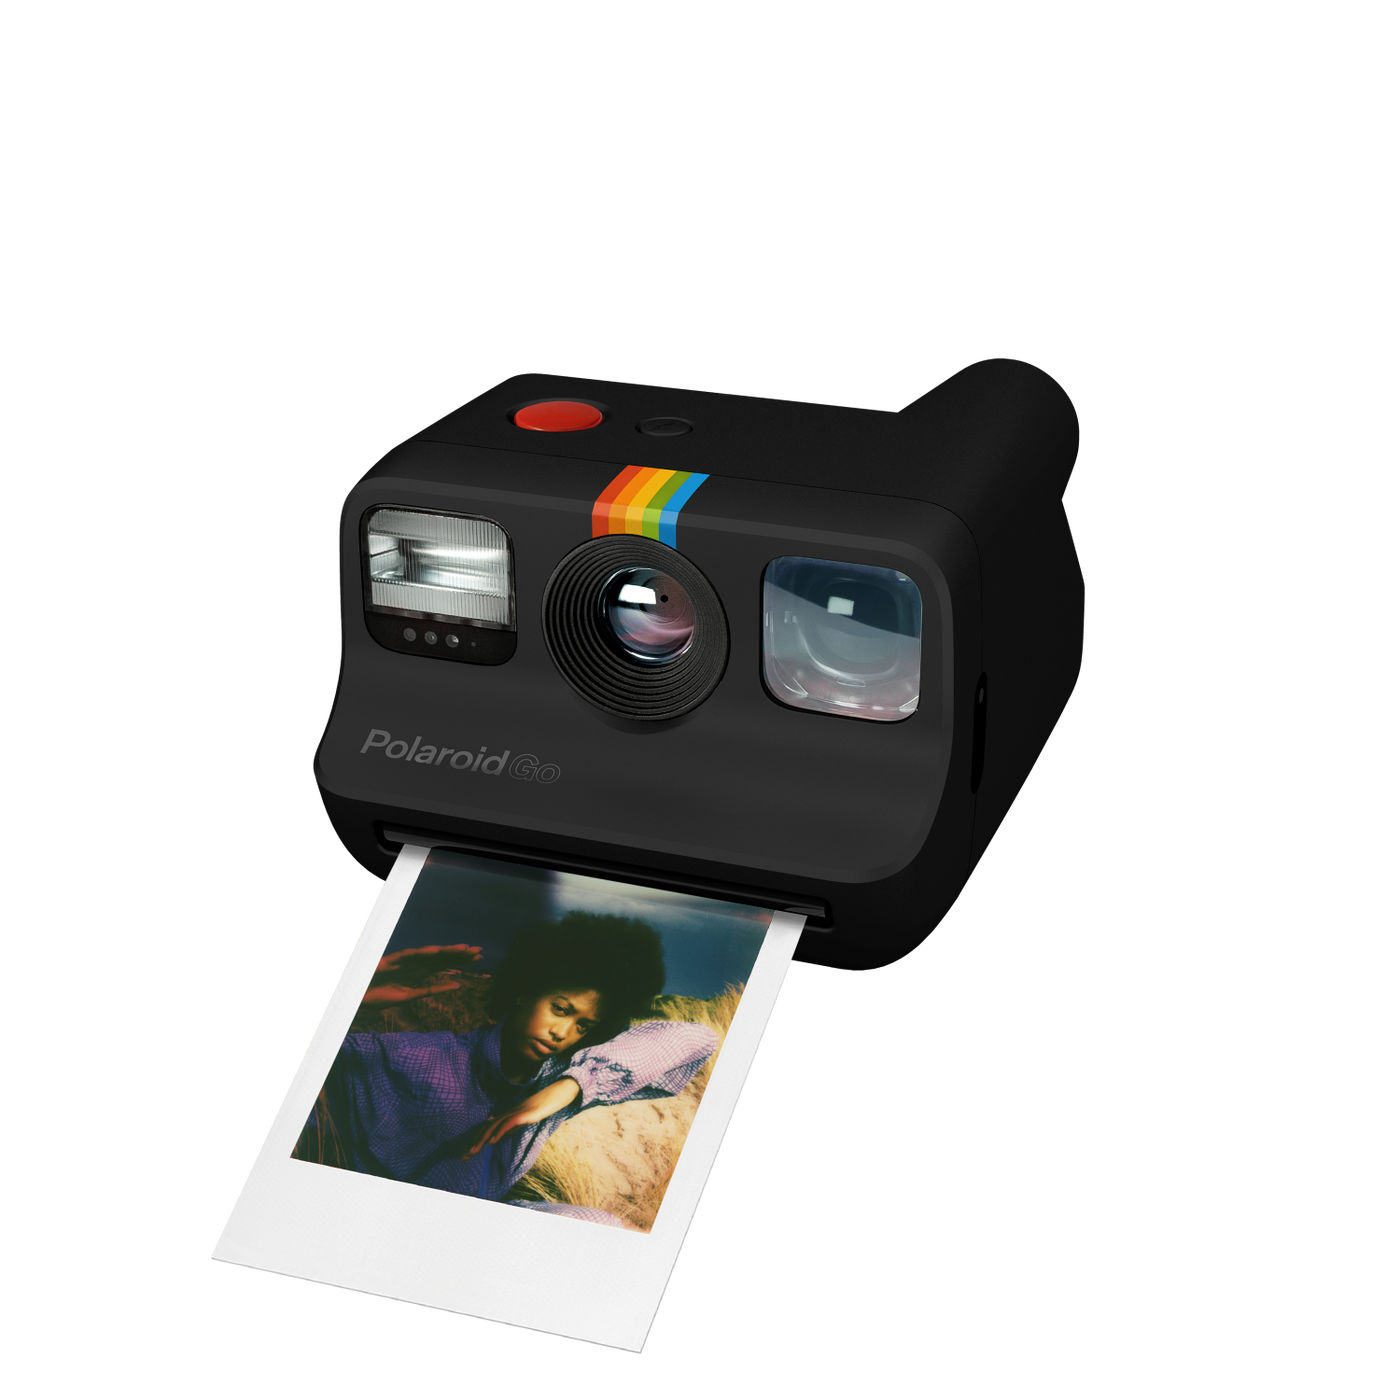 Polaroid Everything Box Polaroid Go Generation 2 - Black